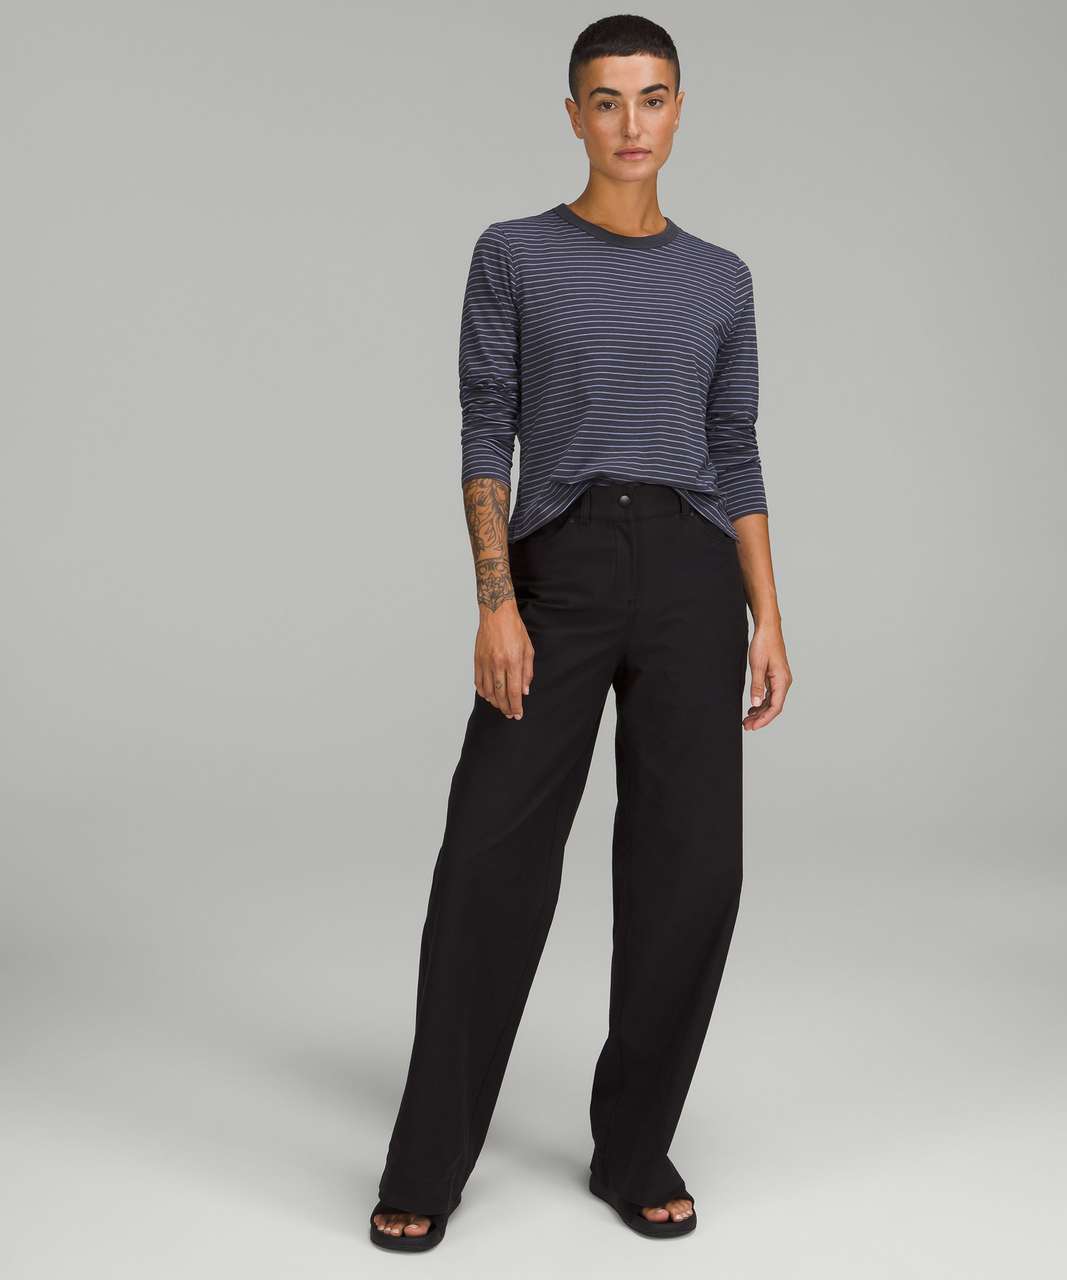 Lululemon Classic-Fit Cotton-Blend Long Sleeve Shirt - Parallel Stripe Graphite Grey Peri Purple